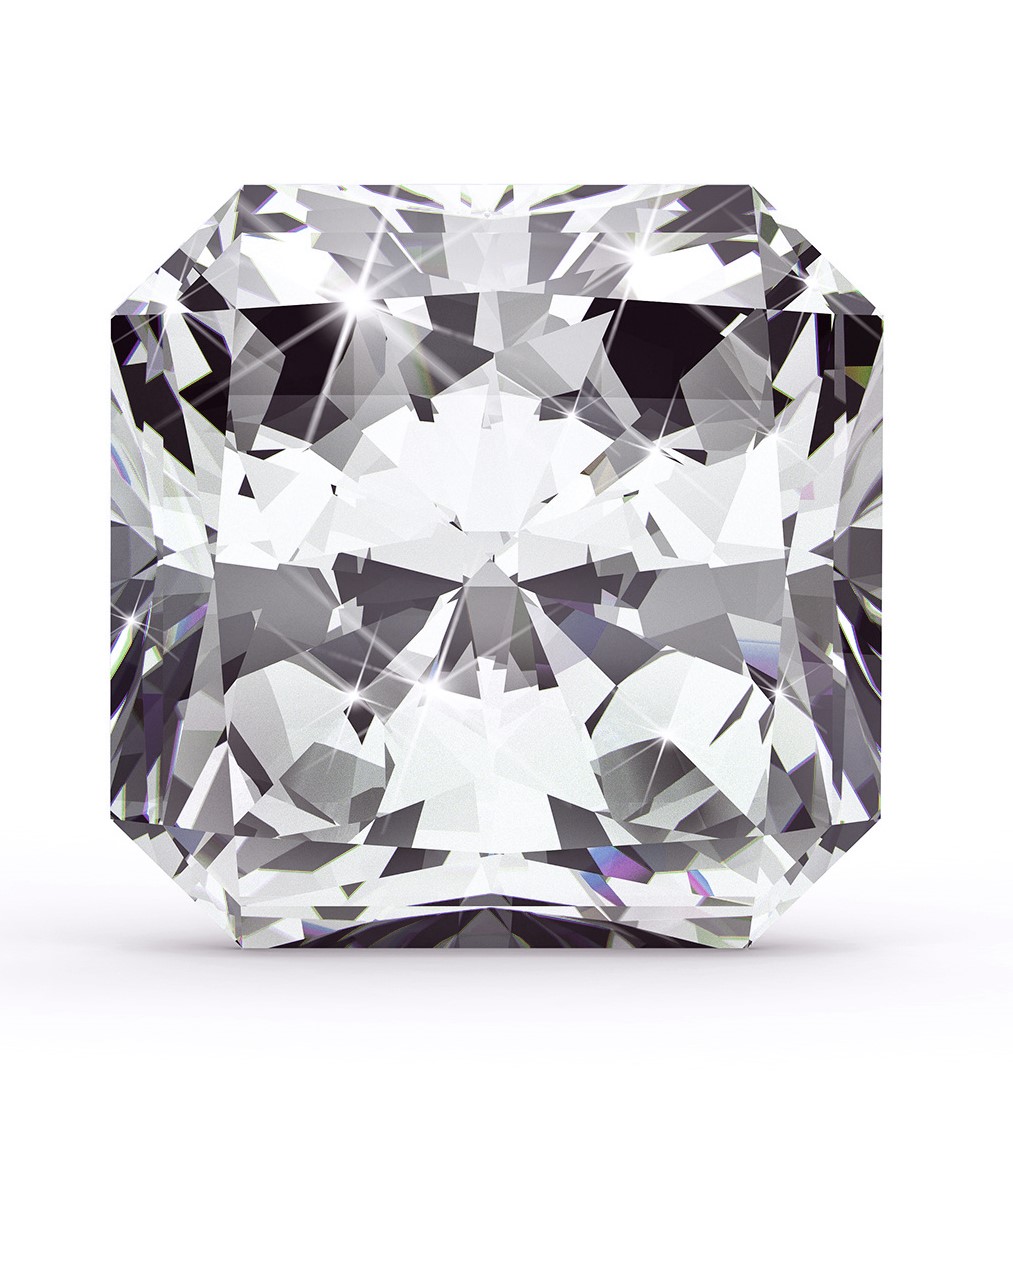 Radiant Diamond